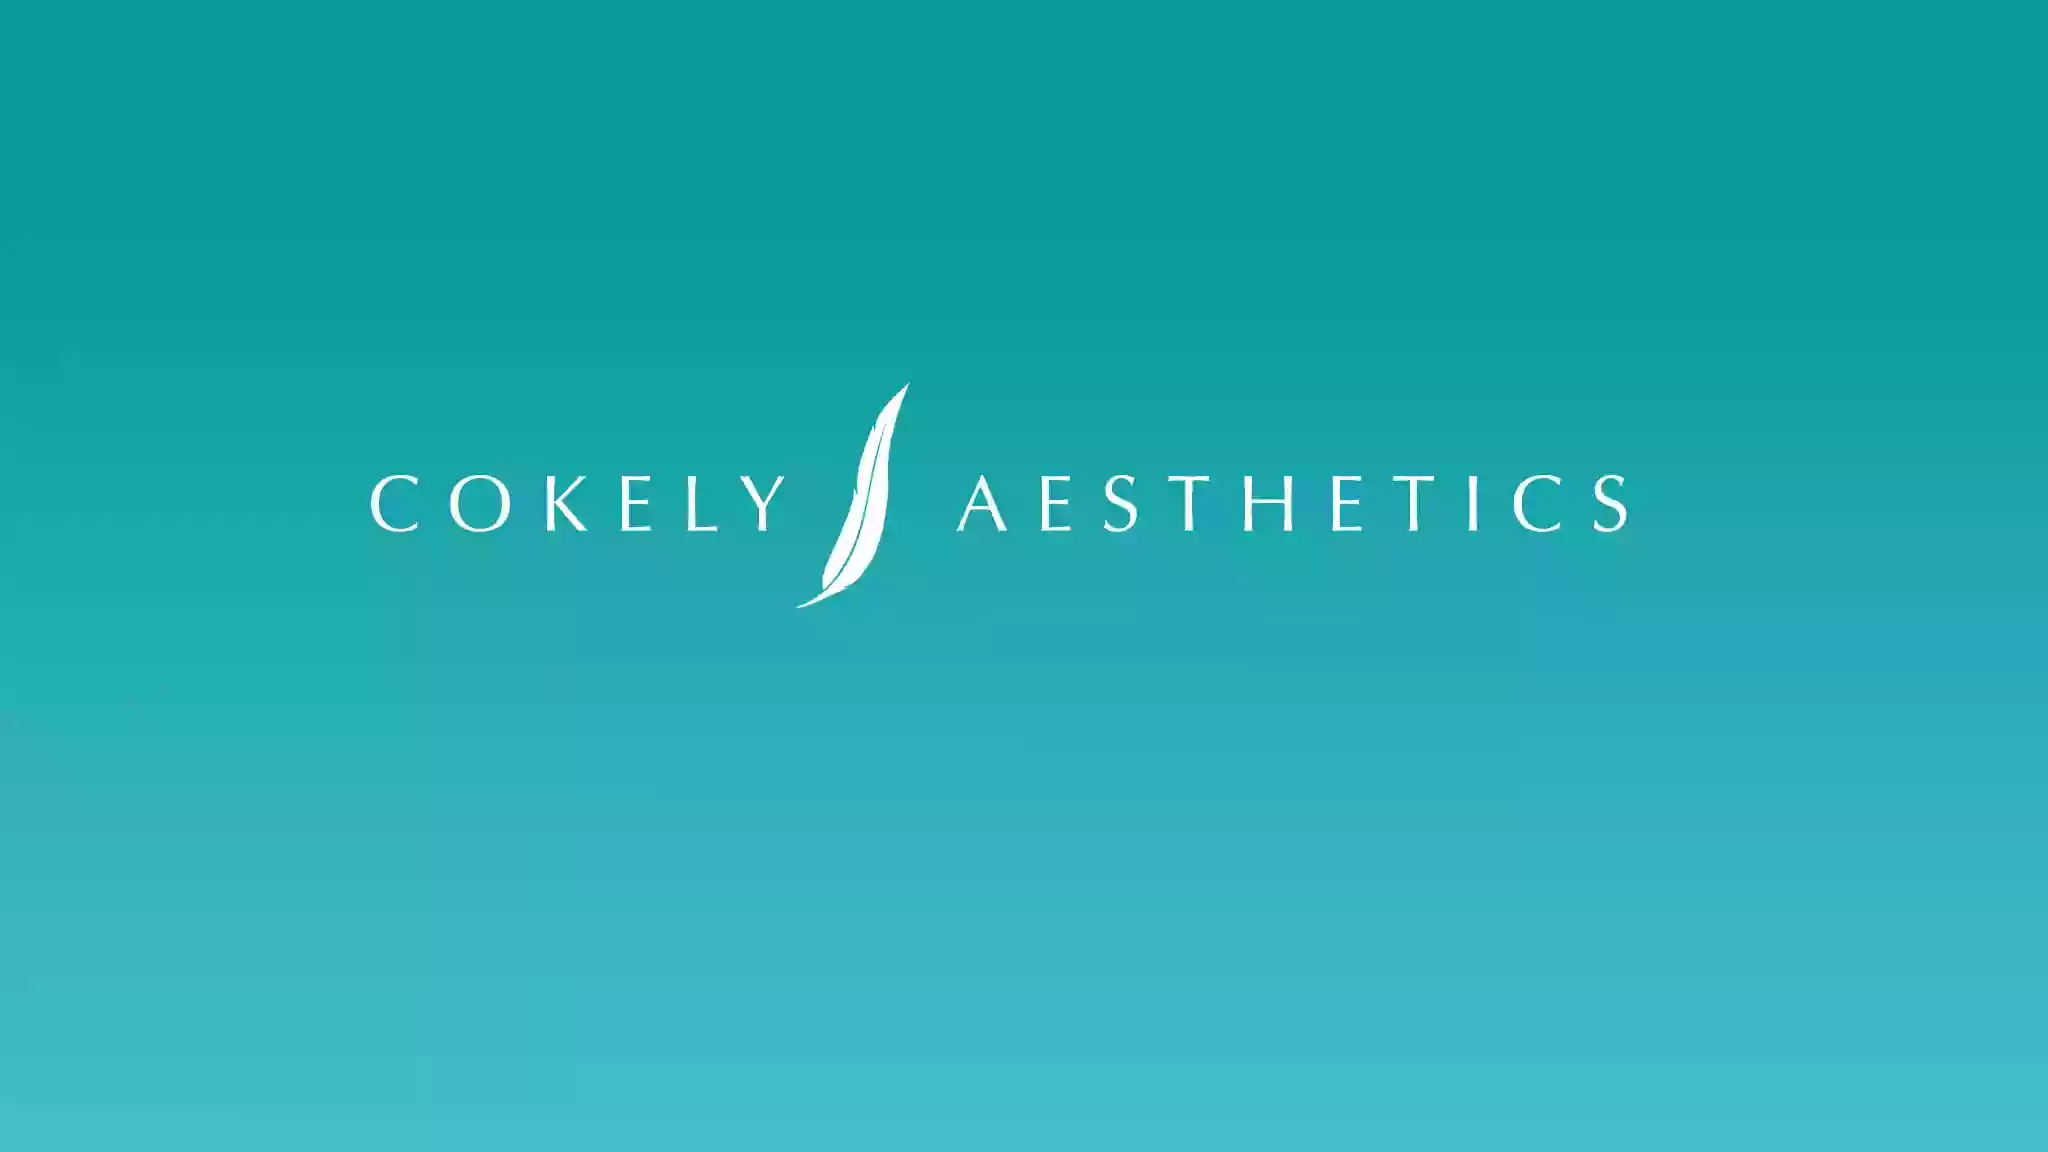 Cokely Aesthetics & Medical Services Bristol